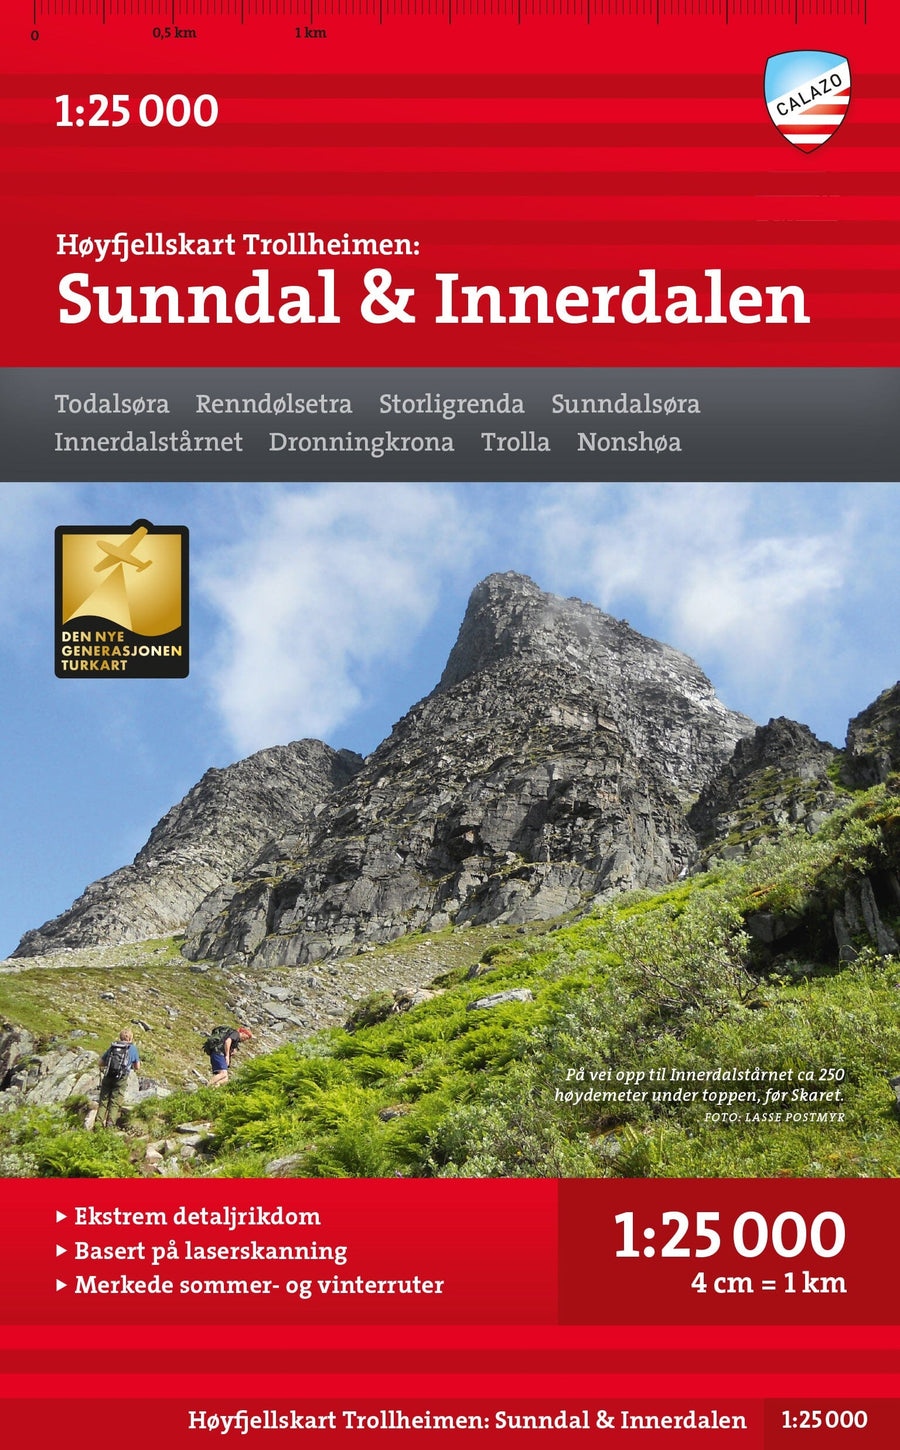 Carte de haute montagne - Trollheimen: Sunndal & Innerdalen (Norvège) | Calazo - Høyfjellskart carte pliée Calazo 